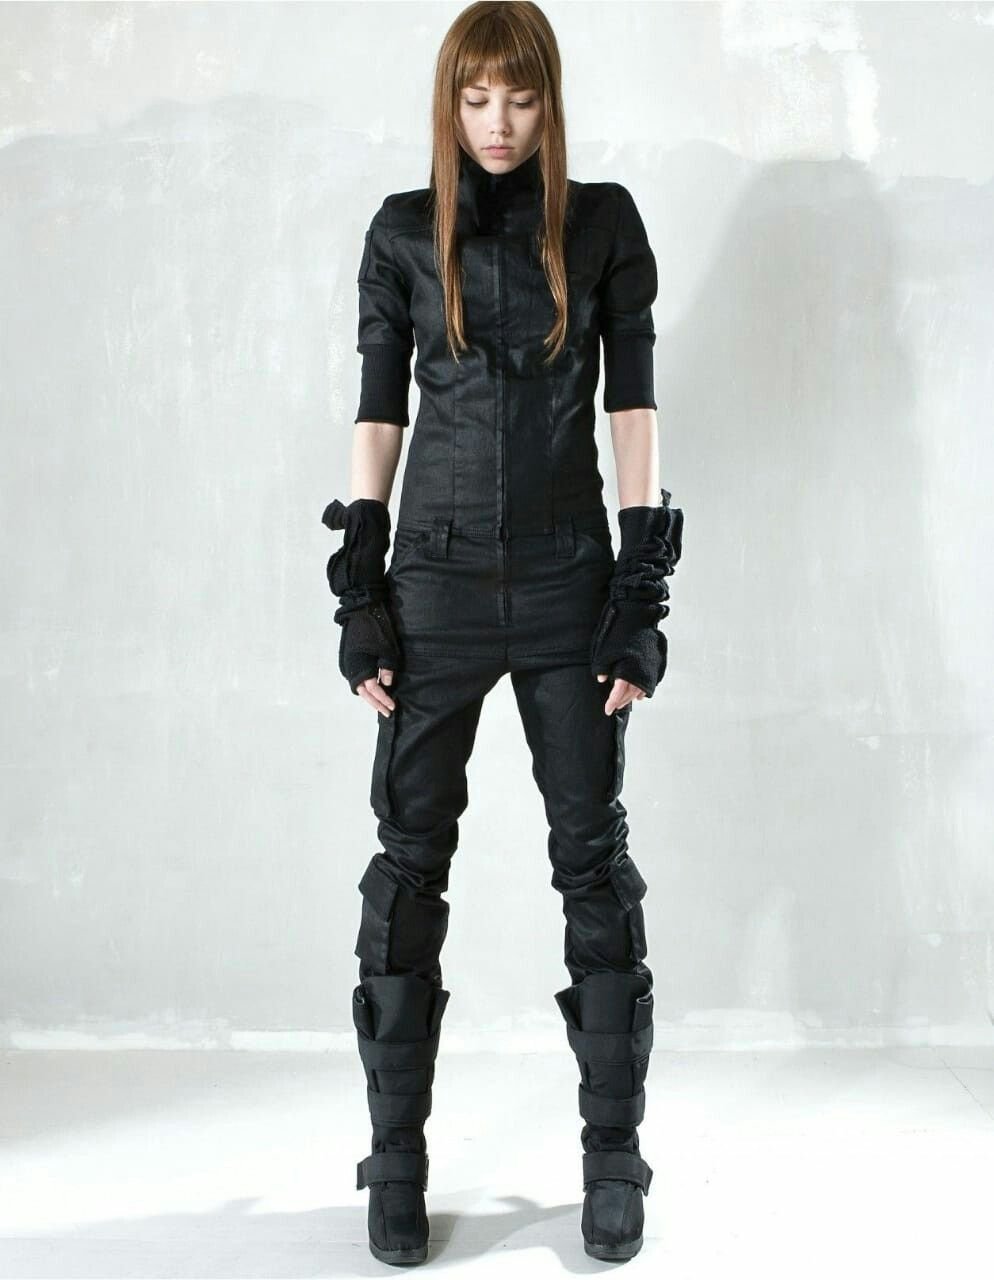 Cyberpunk женская одежда фото 12